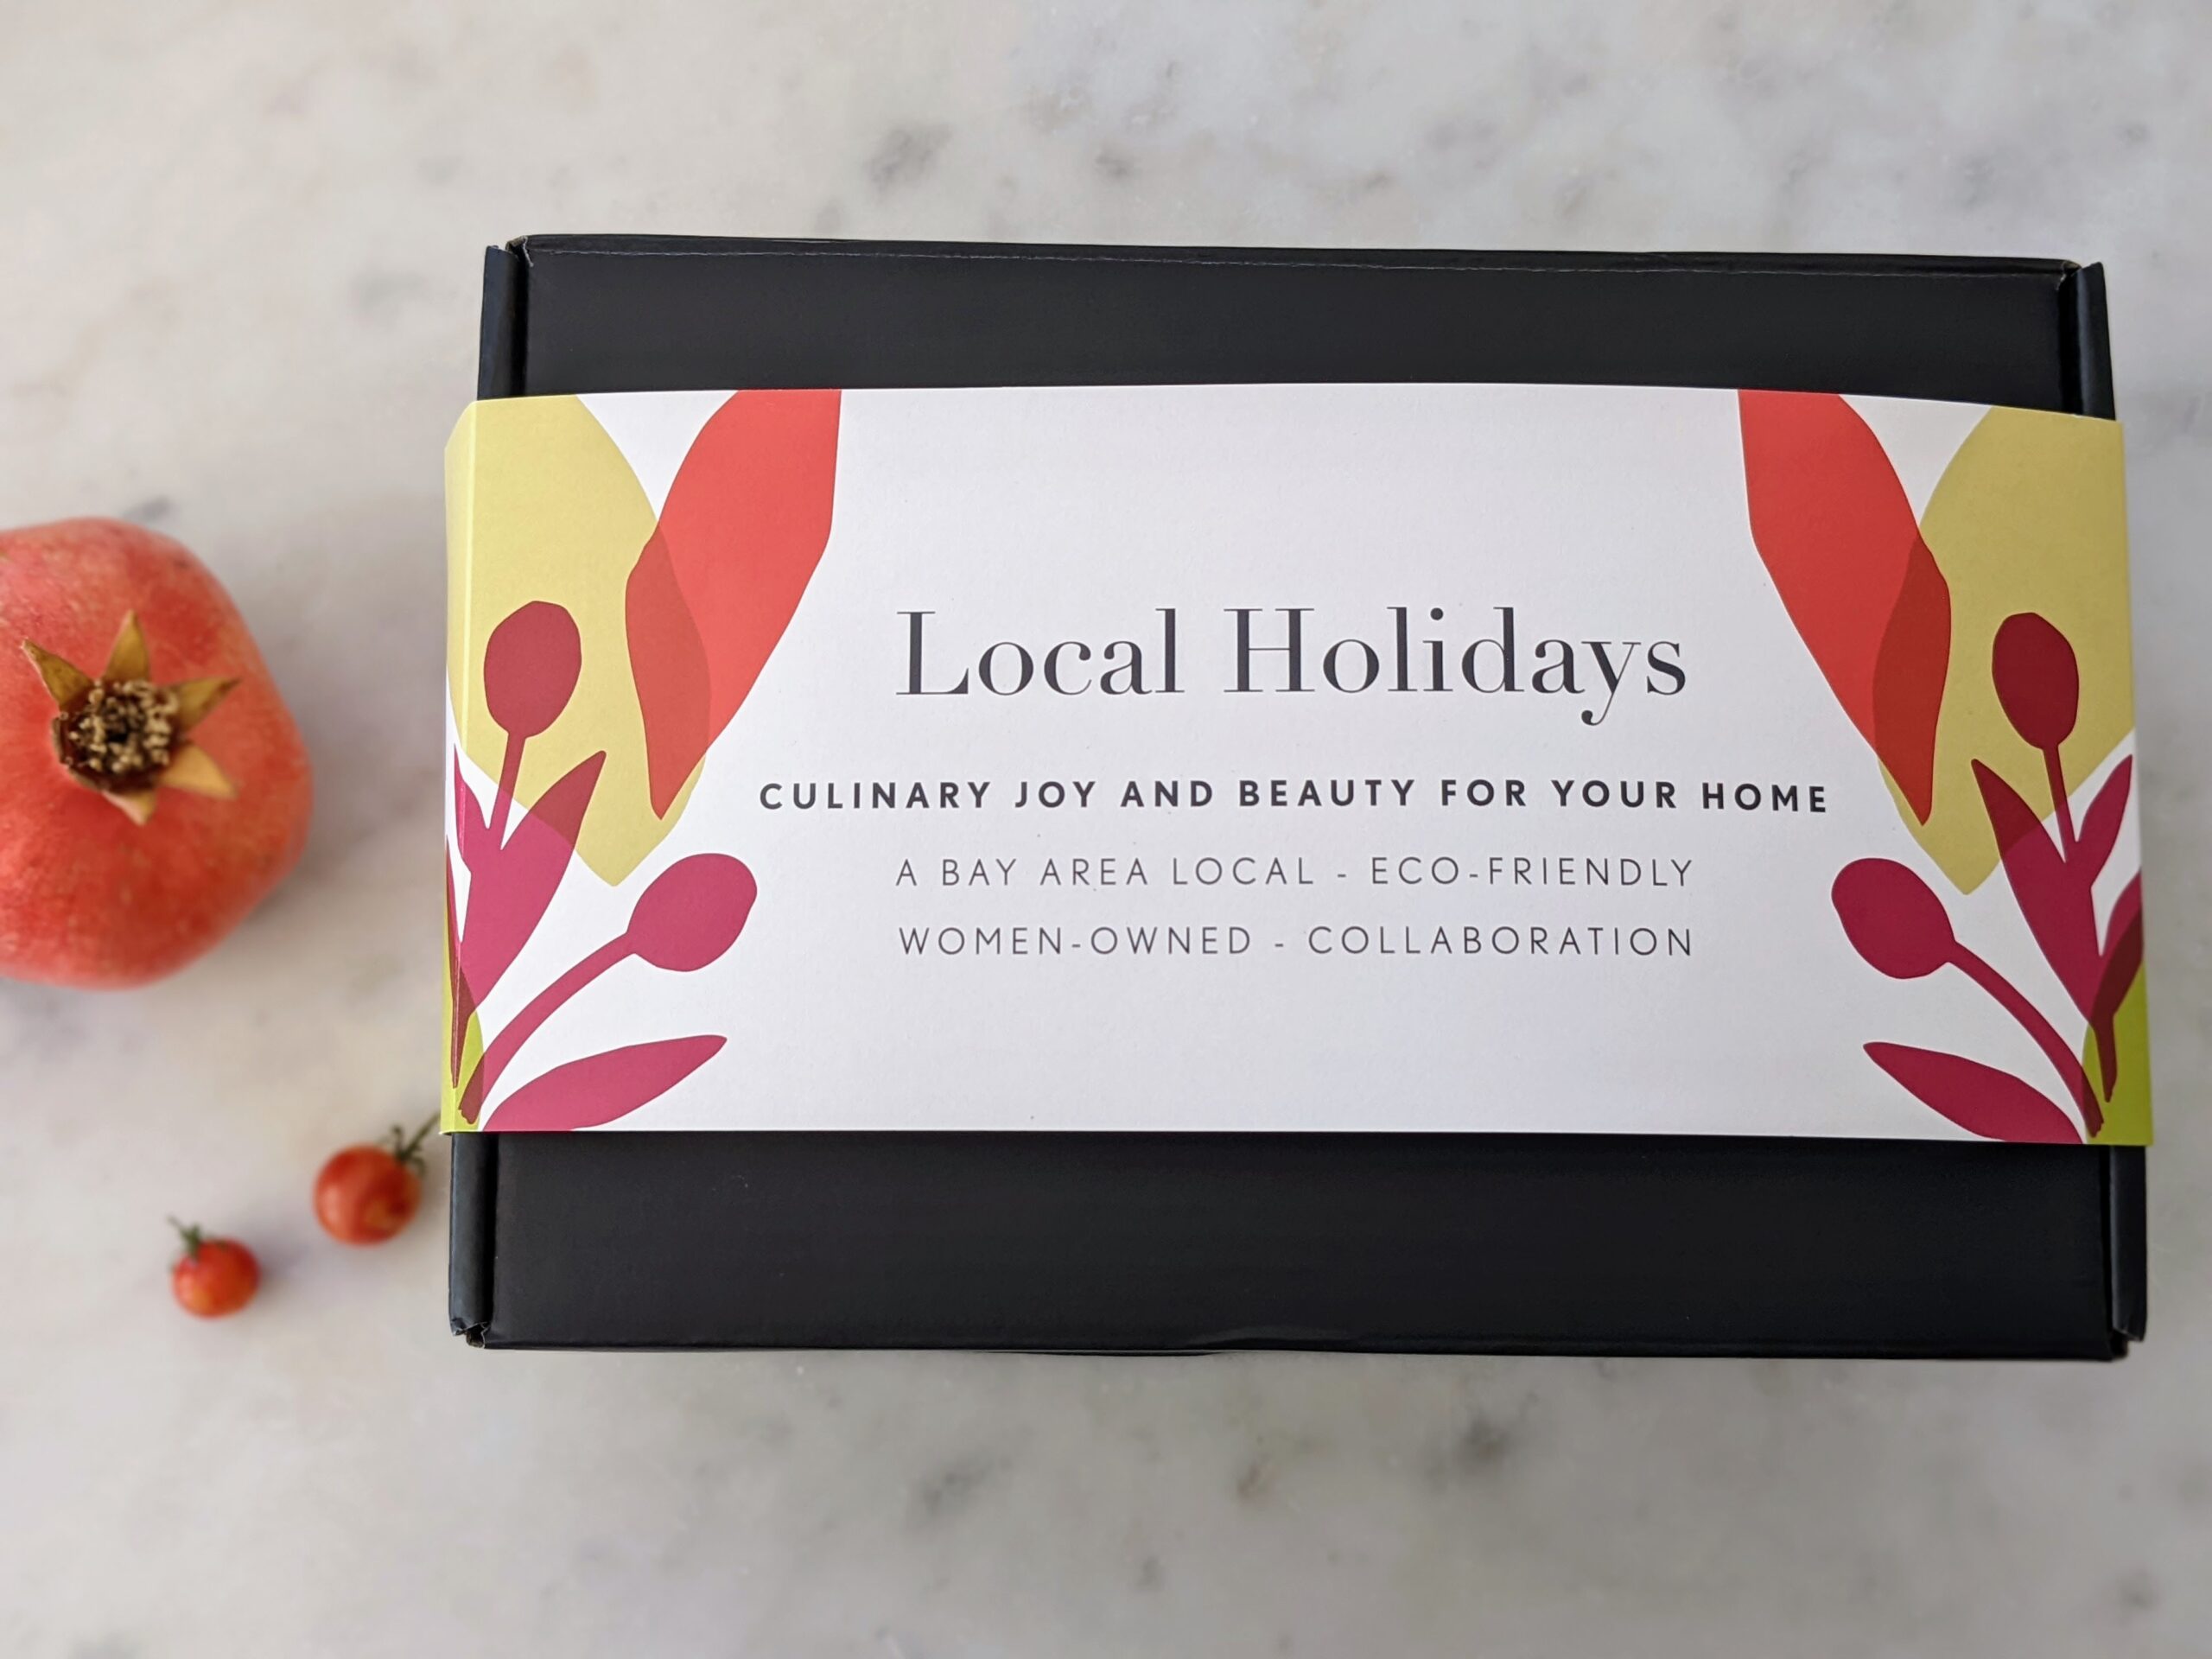 local holidays label on black gift box